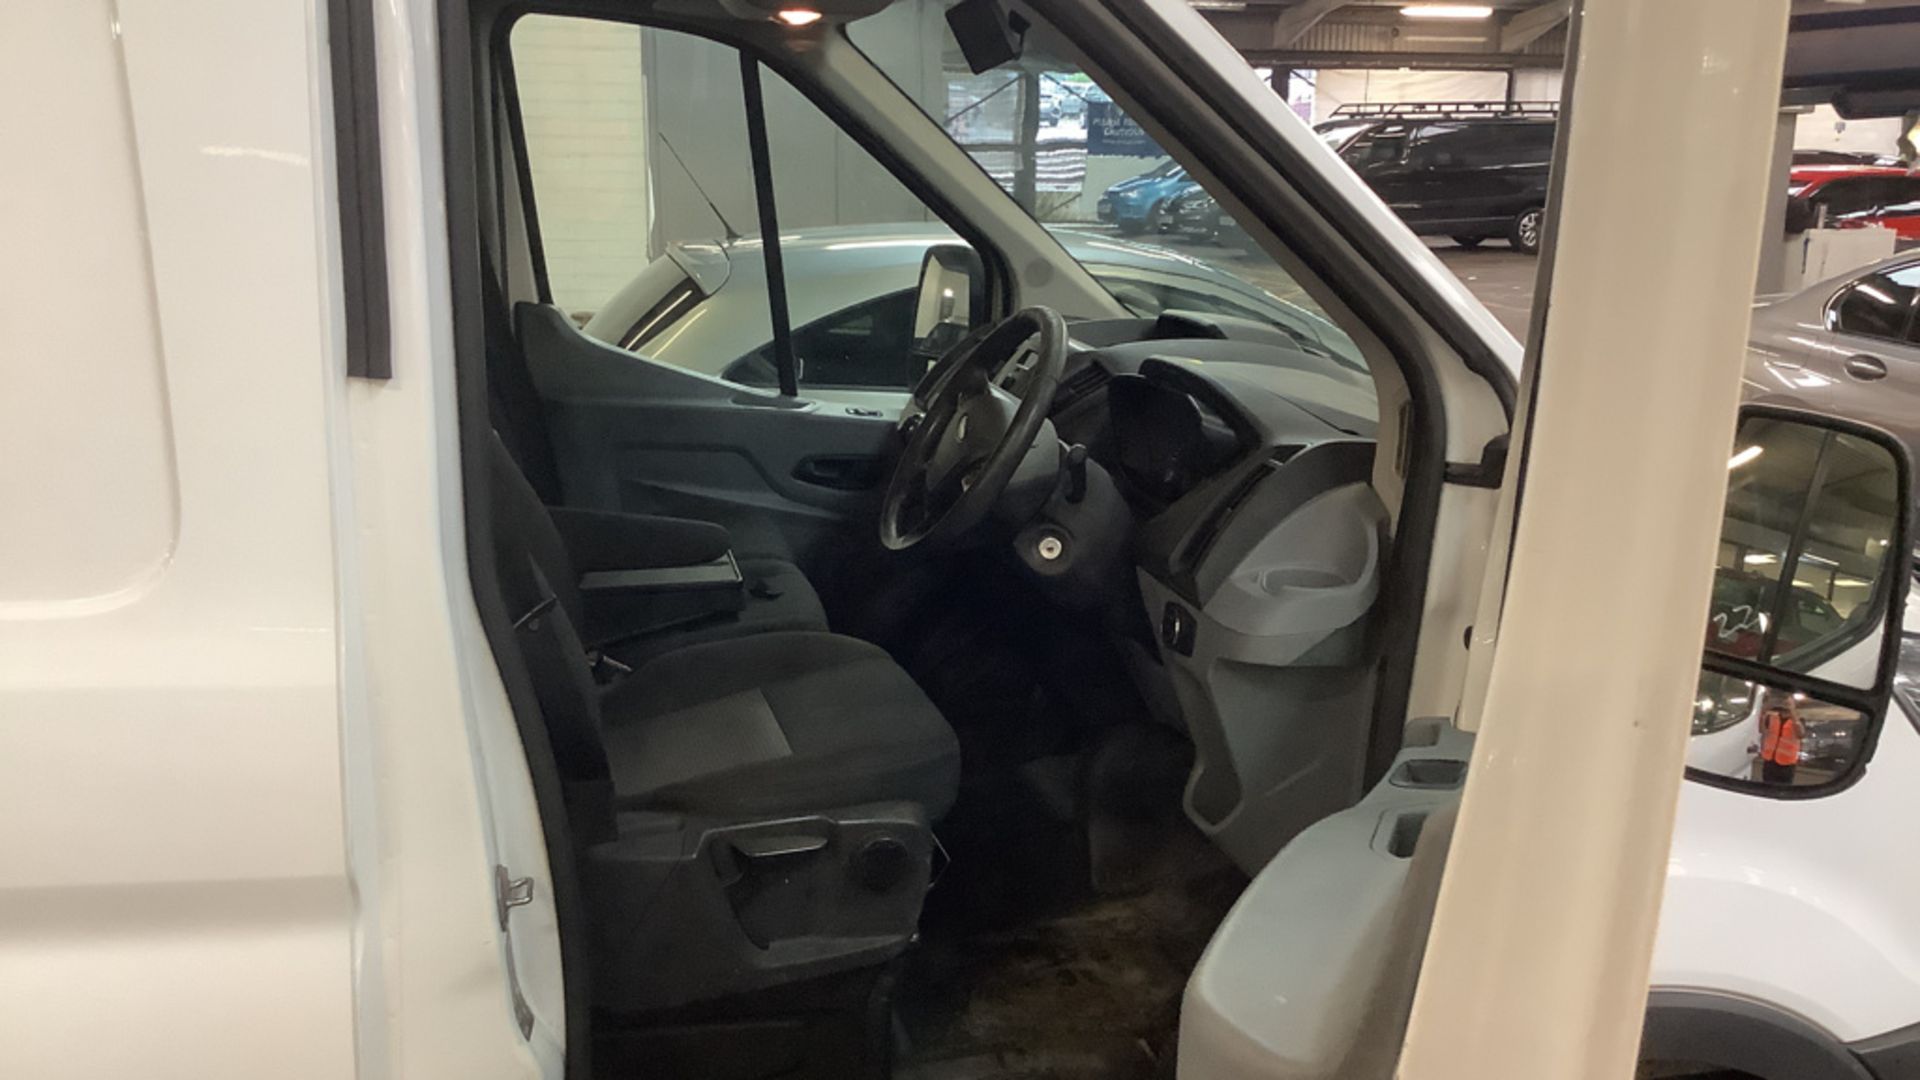 ** ON SALE ** Ford Transit 2.2 TDCI 125 RWD L3 H3 T350 2015 '15 Reg' - Panel Van - Image 7 of 10